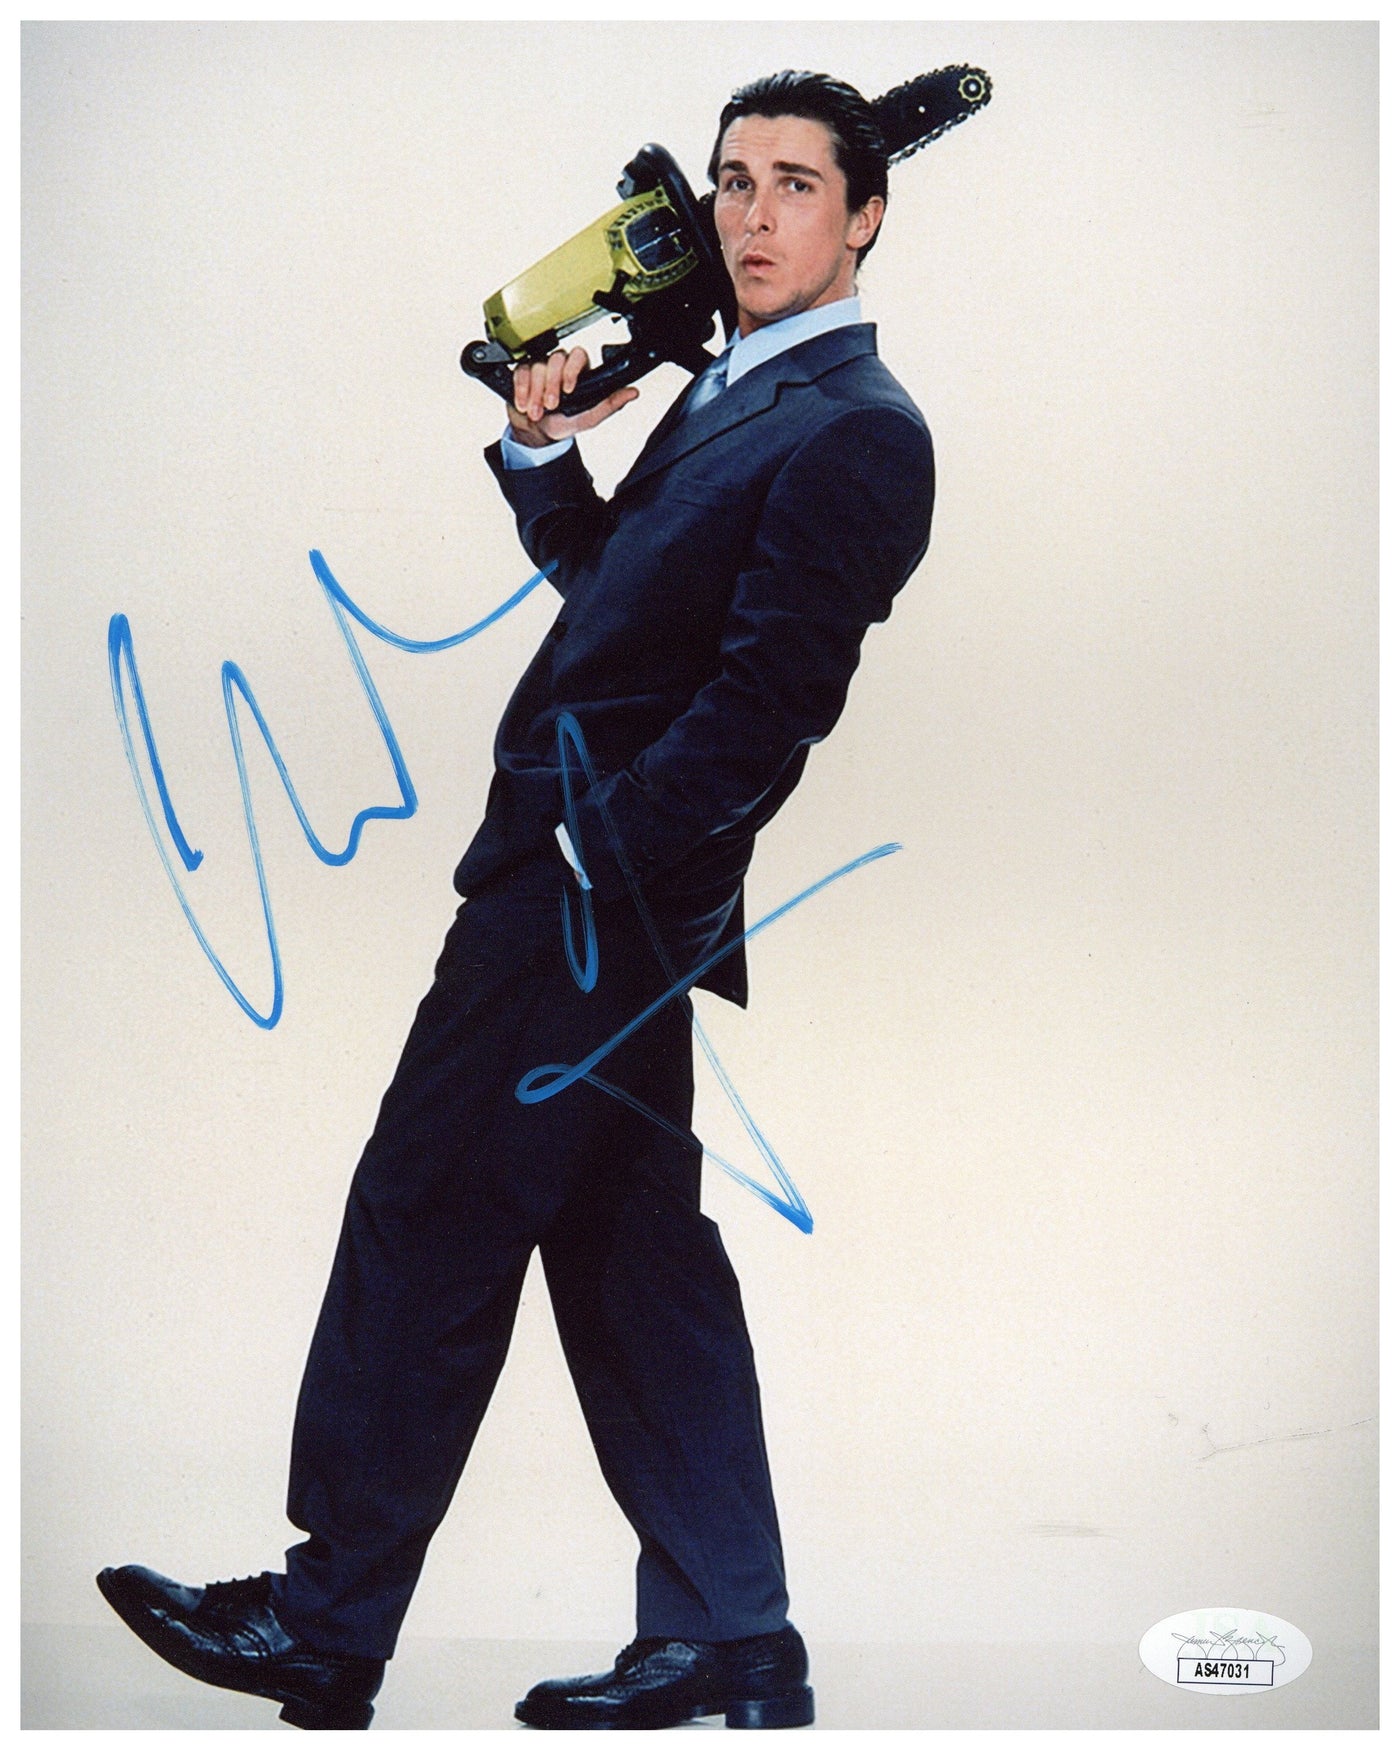 Christian Bale Signed 8x10 Photo American Psycho Autographed JSA COA